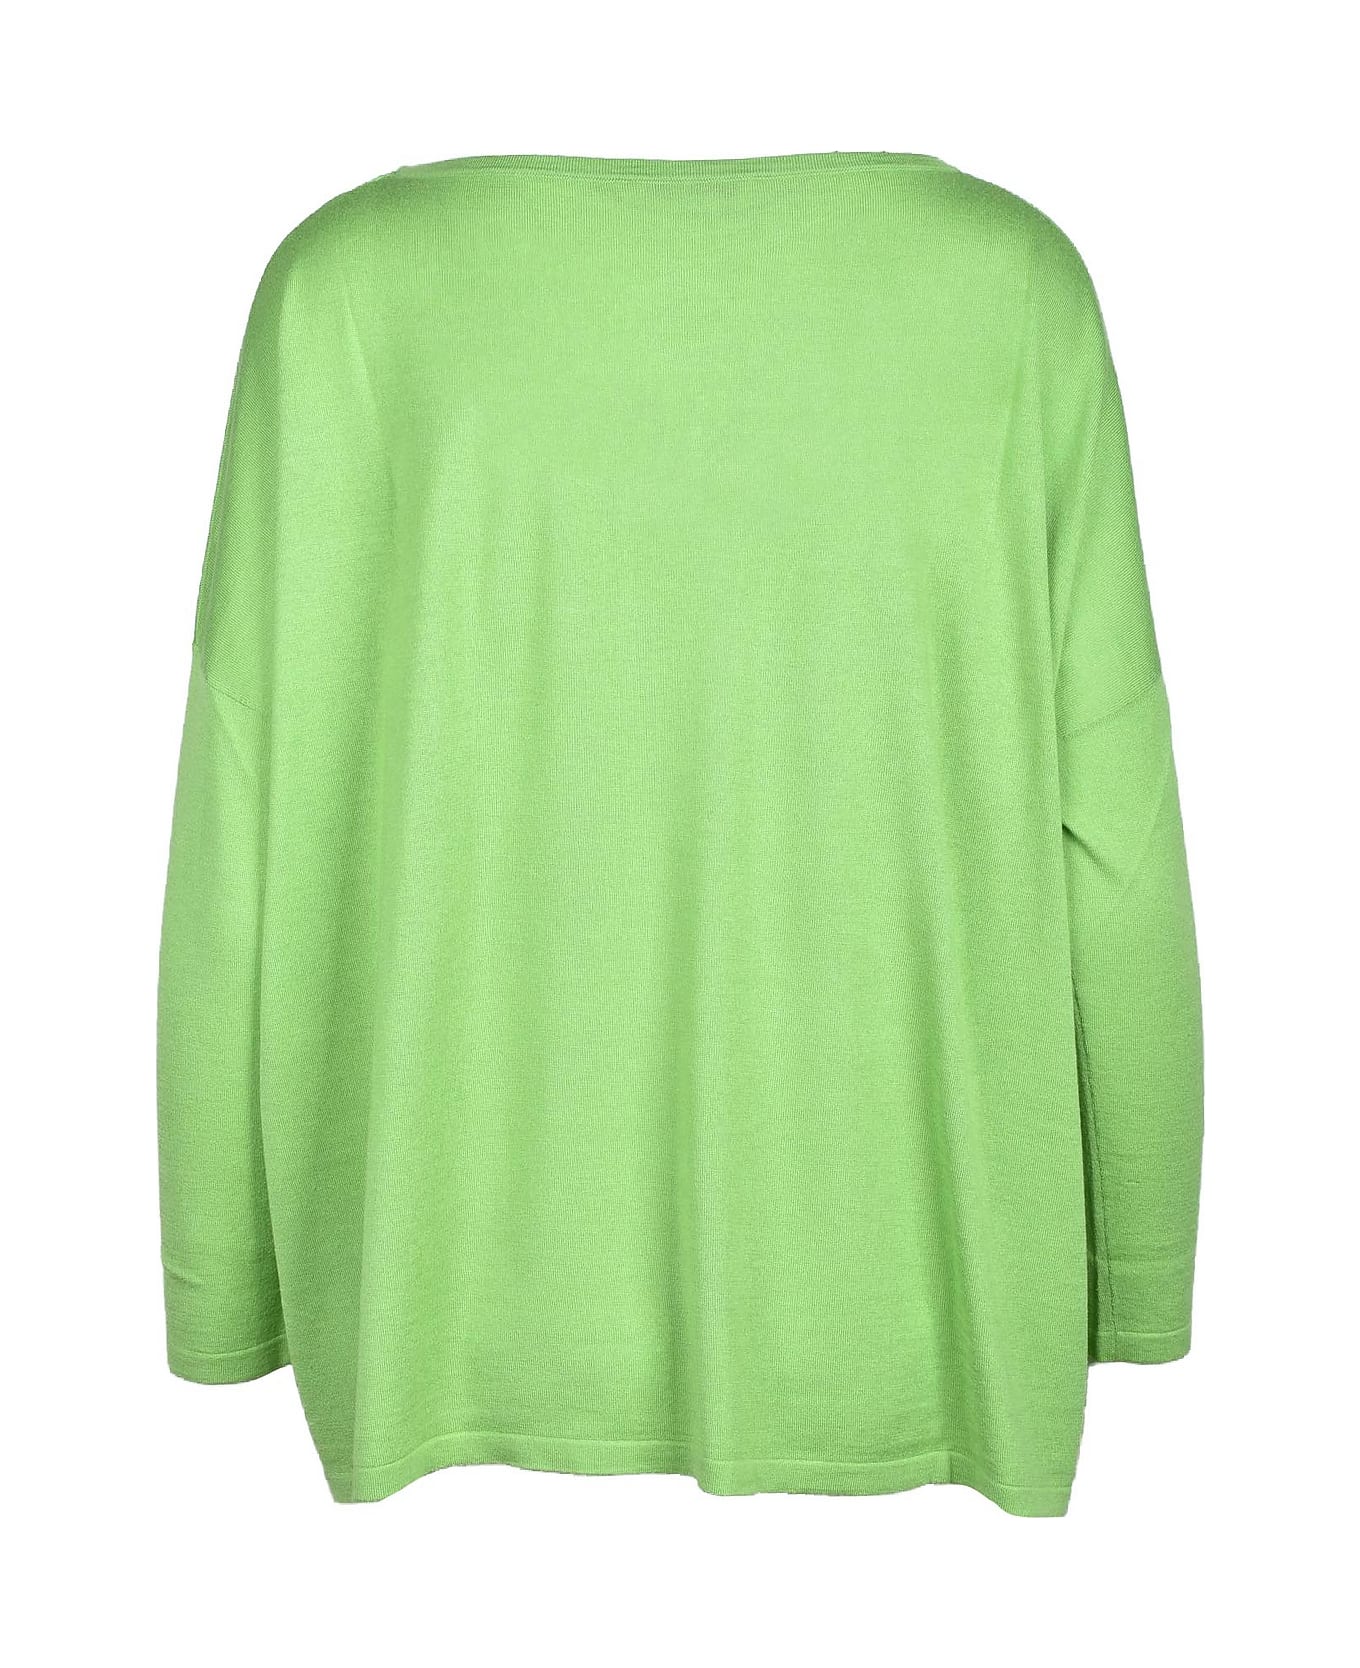 Kangra Women's Bottle Green Sweater - Turquoise